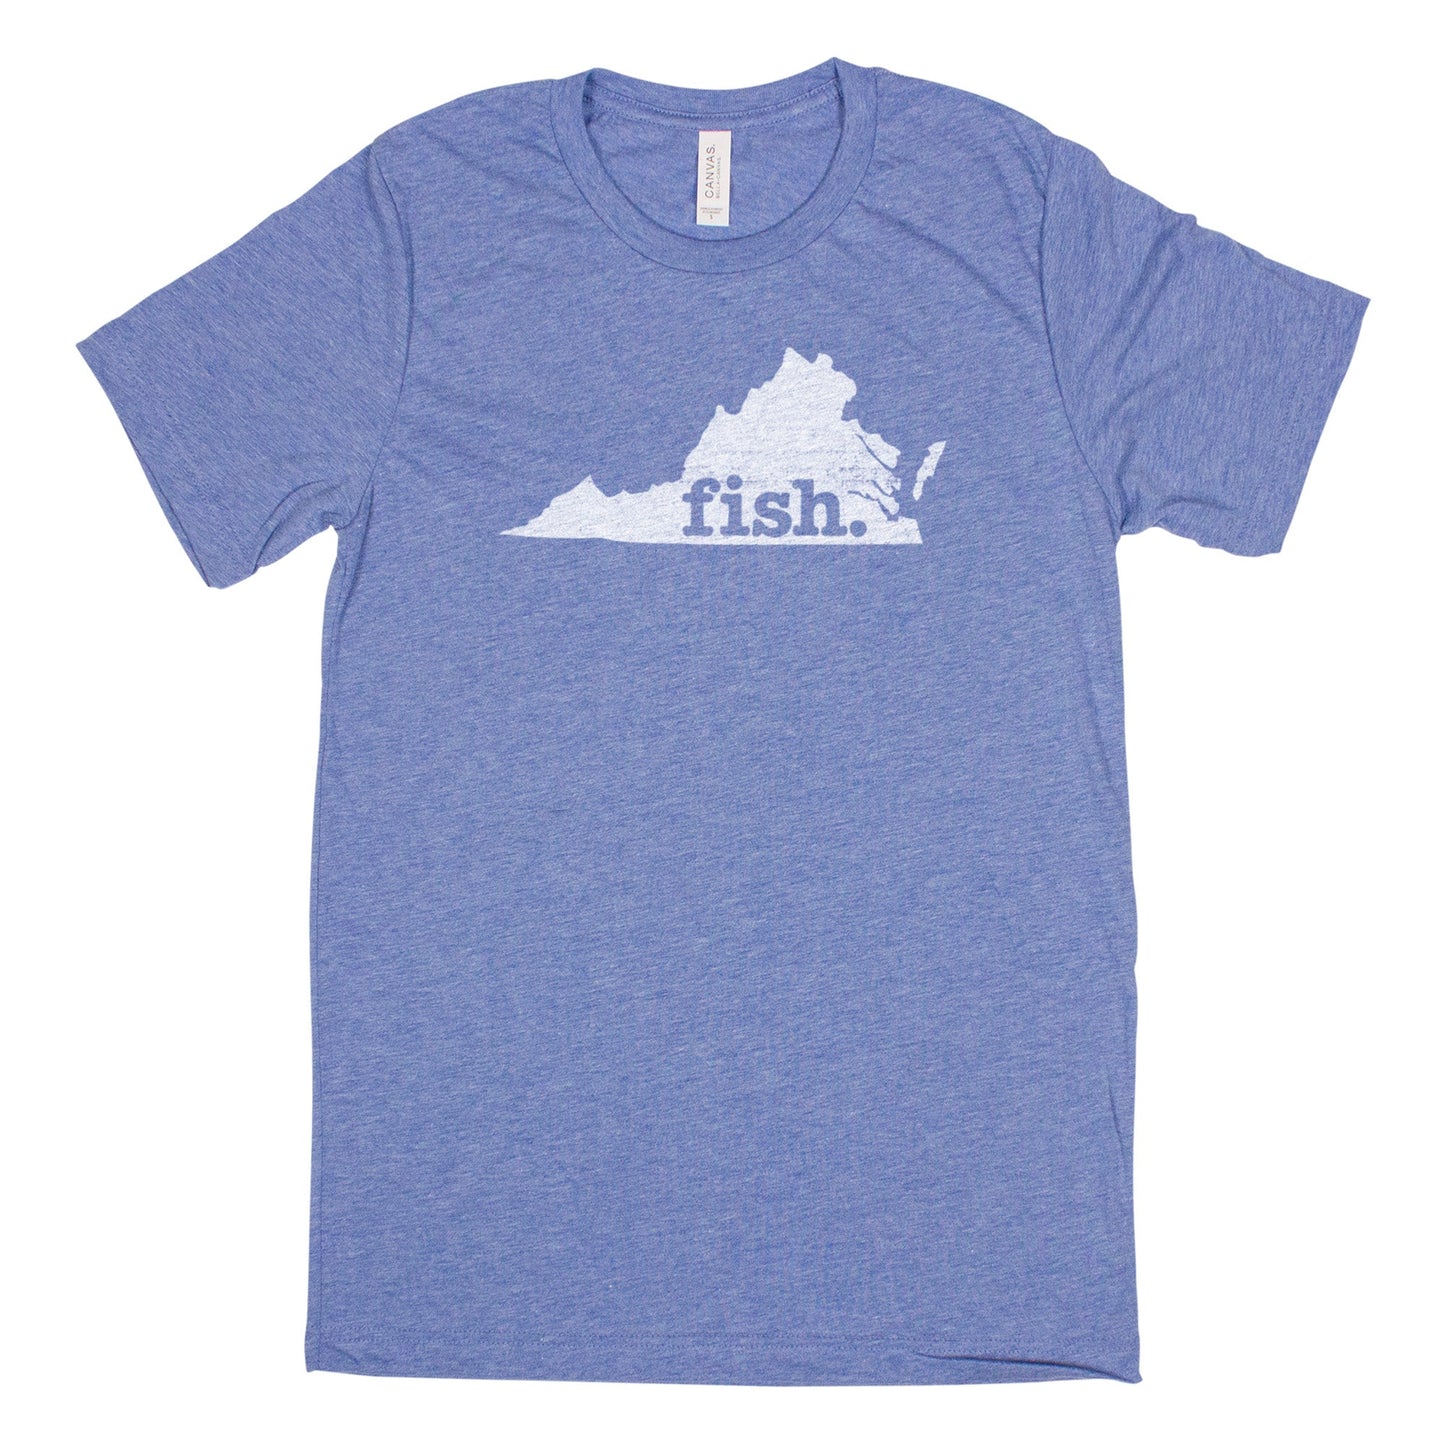 fish. Men's Unisex T-Shirt - Virginia